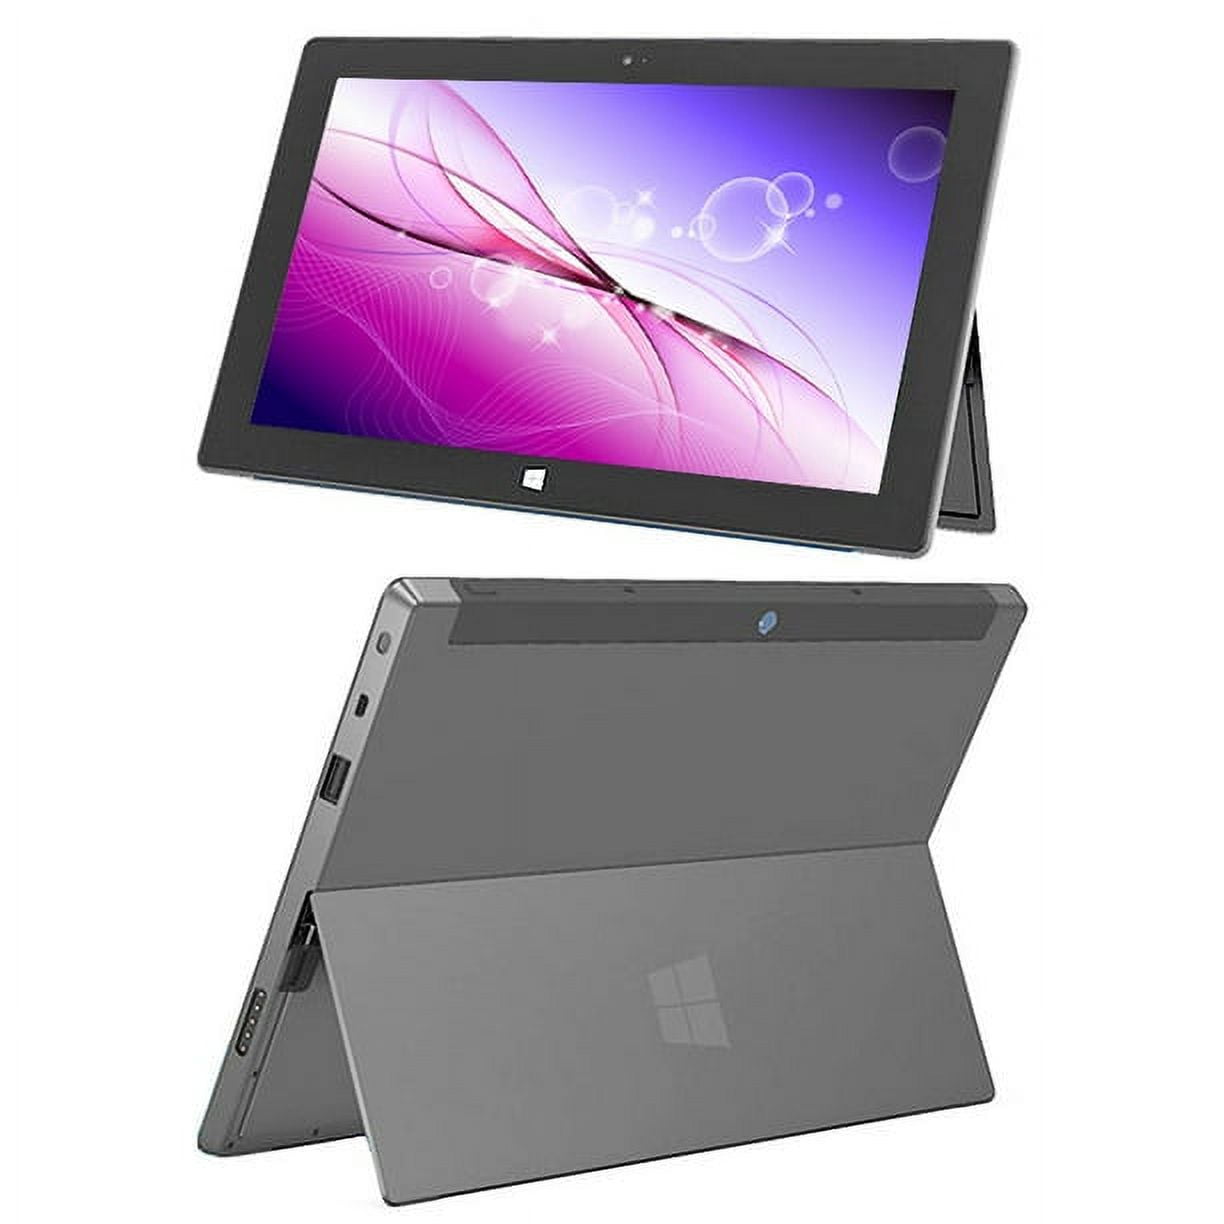 Used Microsoft Surface Pro 4 900MHz Intel(R) Core(TM) m3-6Y30 CPU @ 0.90GHz  128GB Windows 10 Professional 64 12